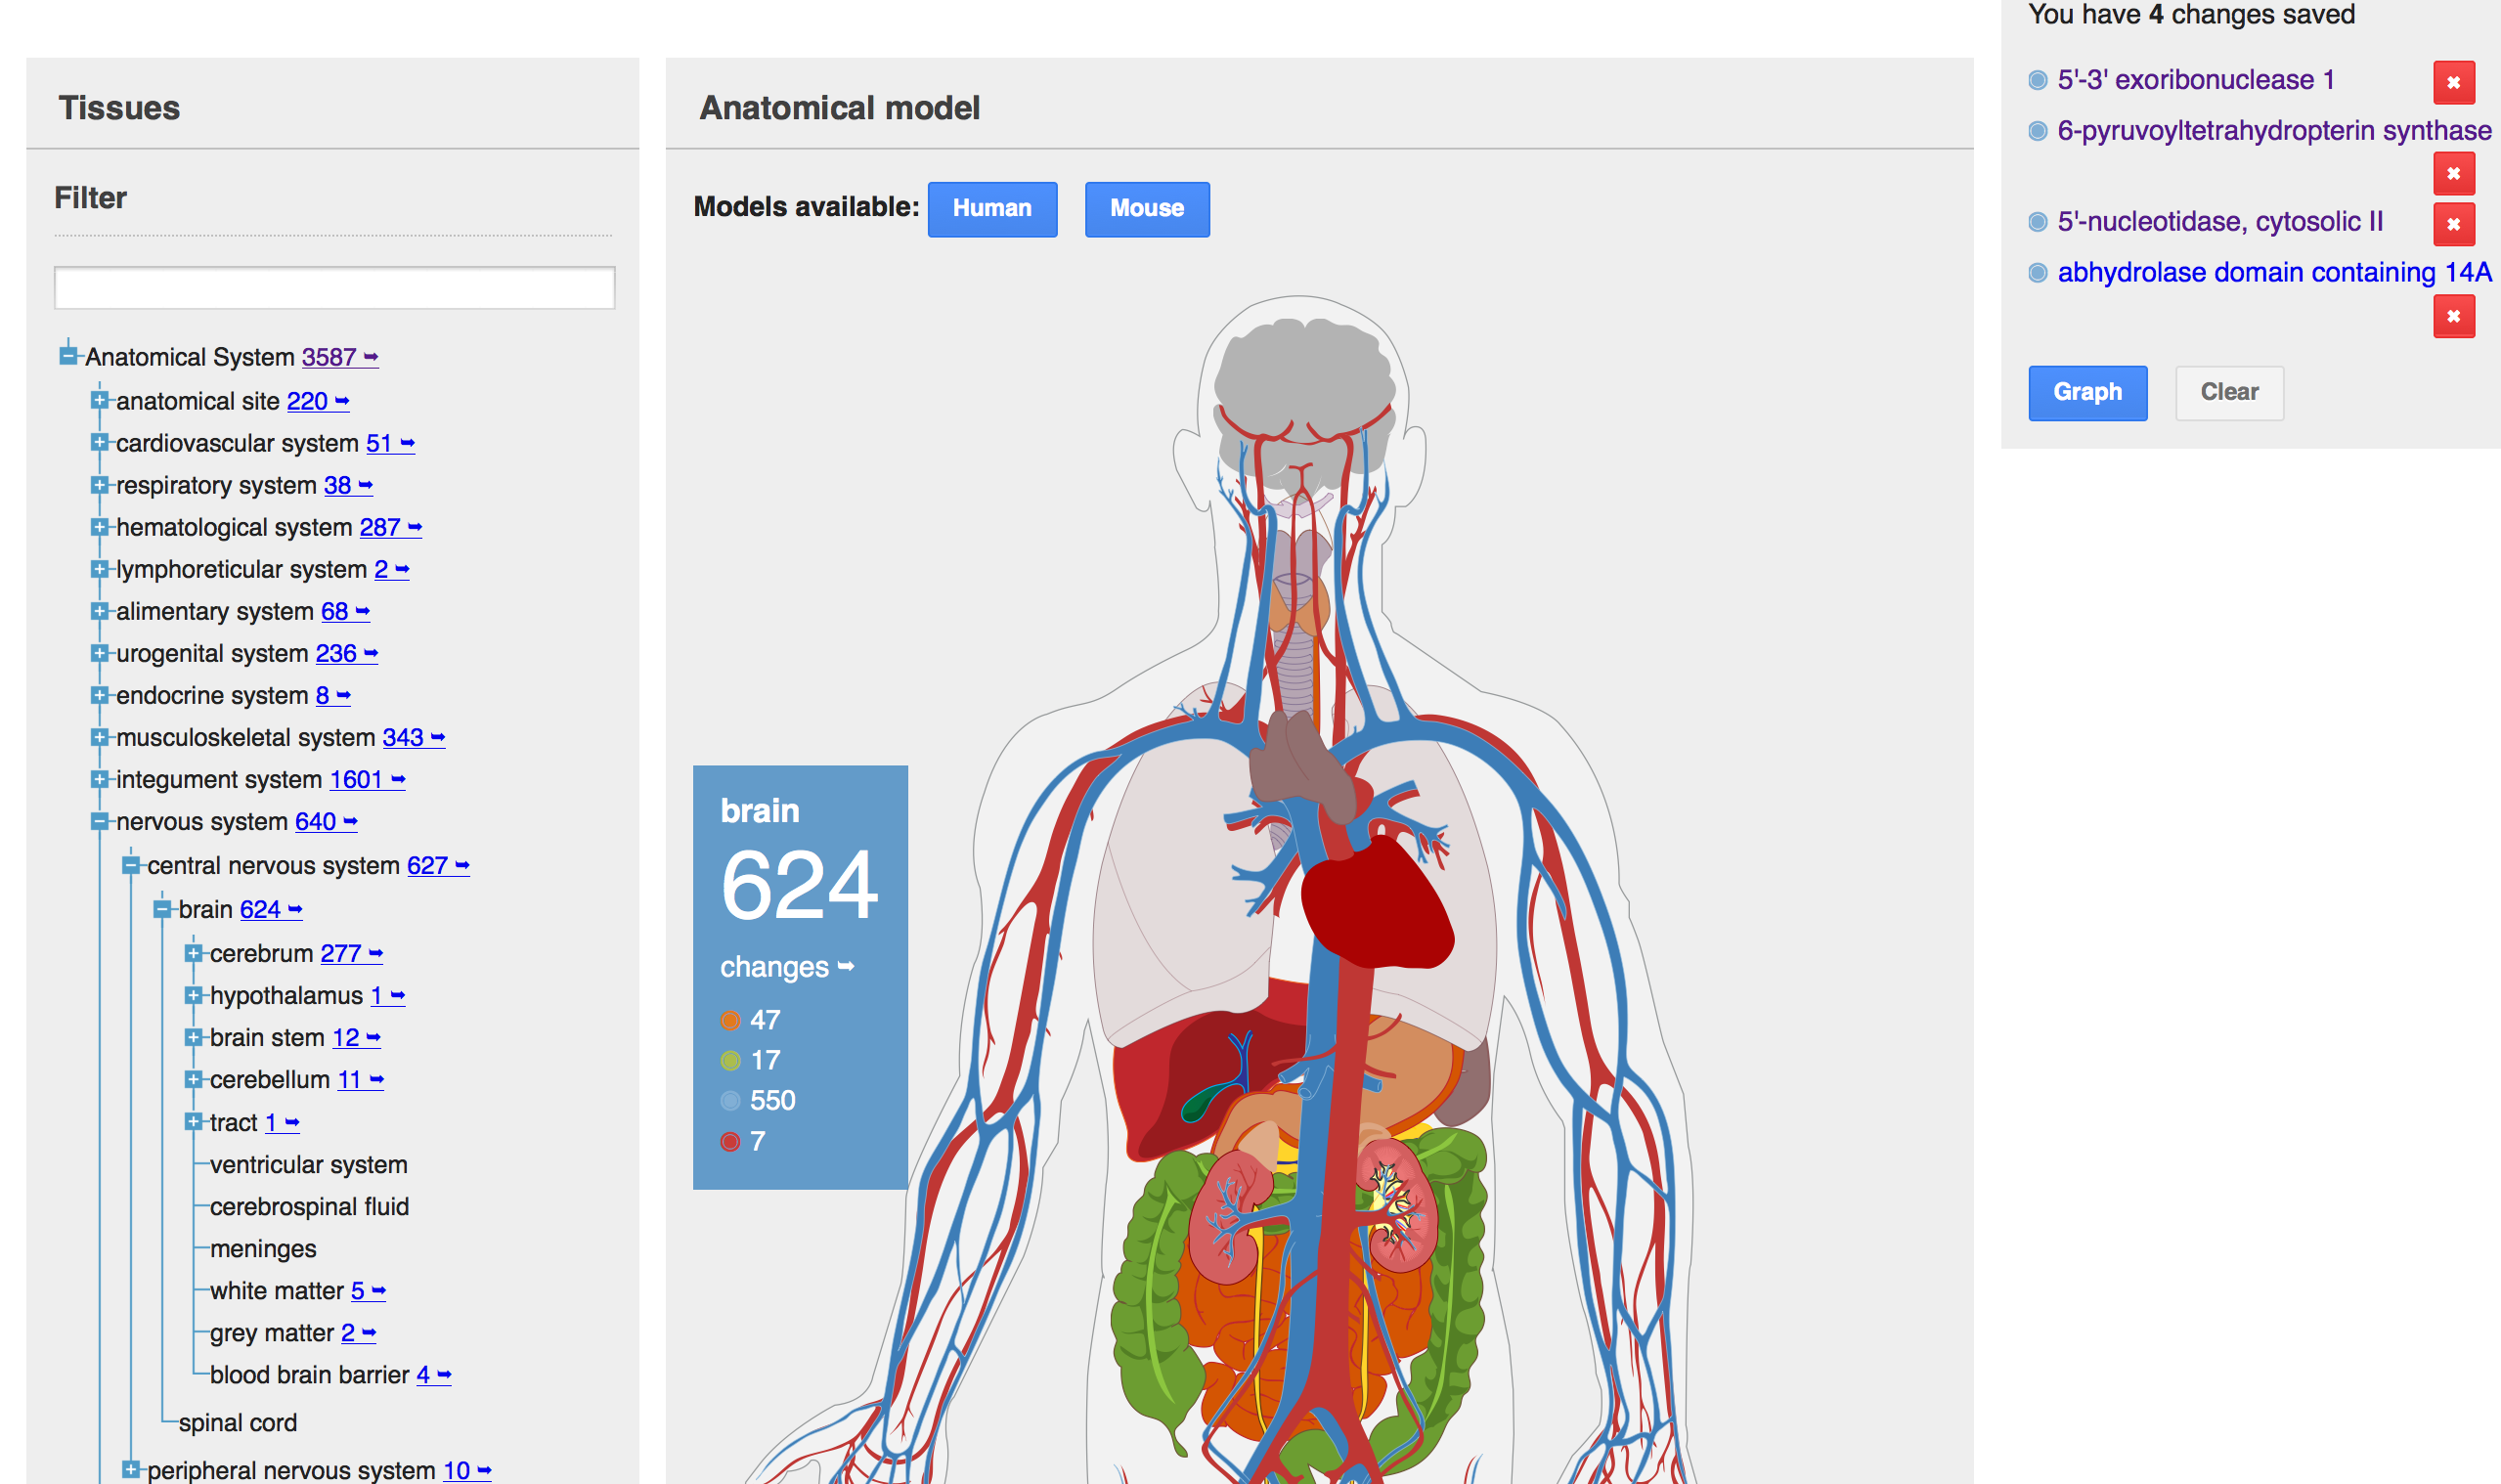 The Digital Ageing Atlas anatomical model